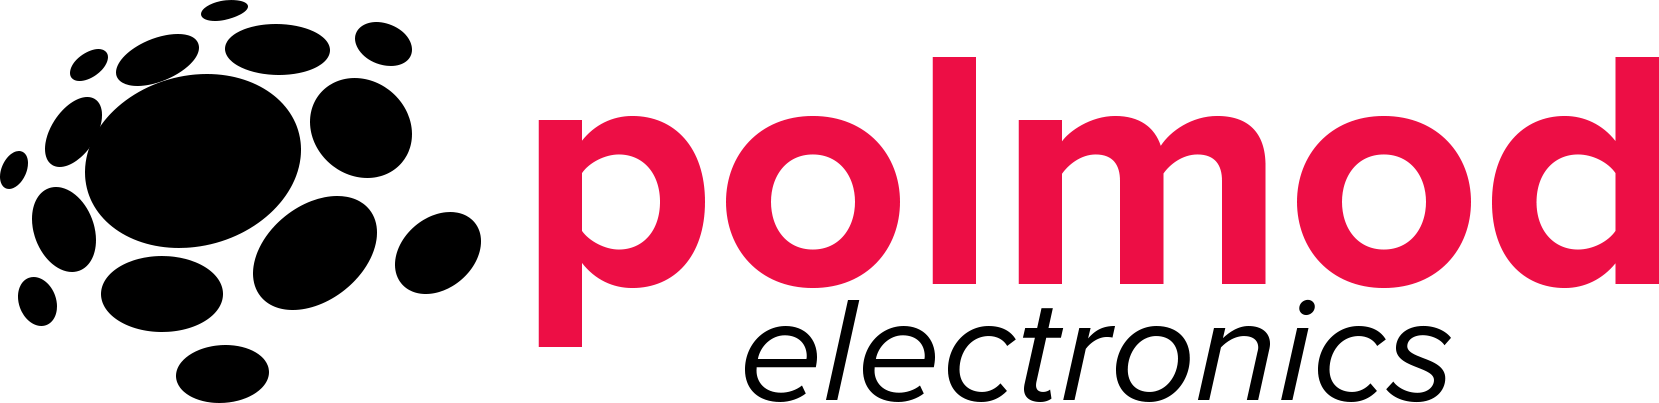 polmod_electronics_logo